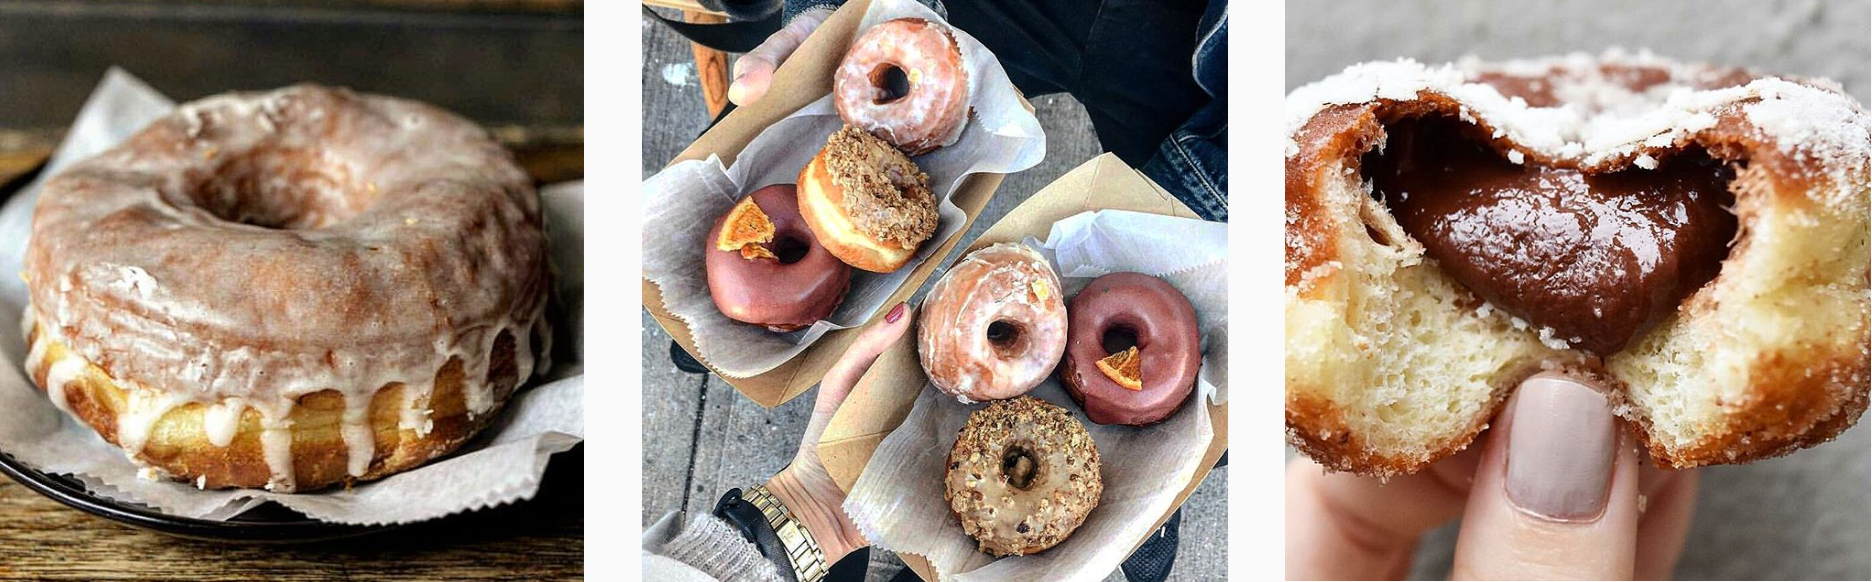 Doughnut Instagram Accounts You Need to Follow - PLANOLY - Dough NYC